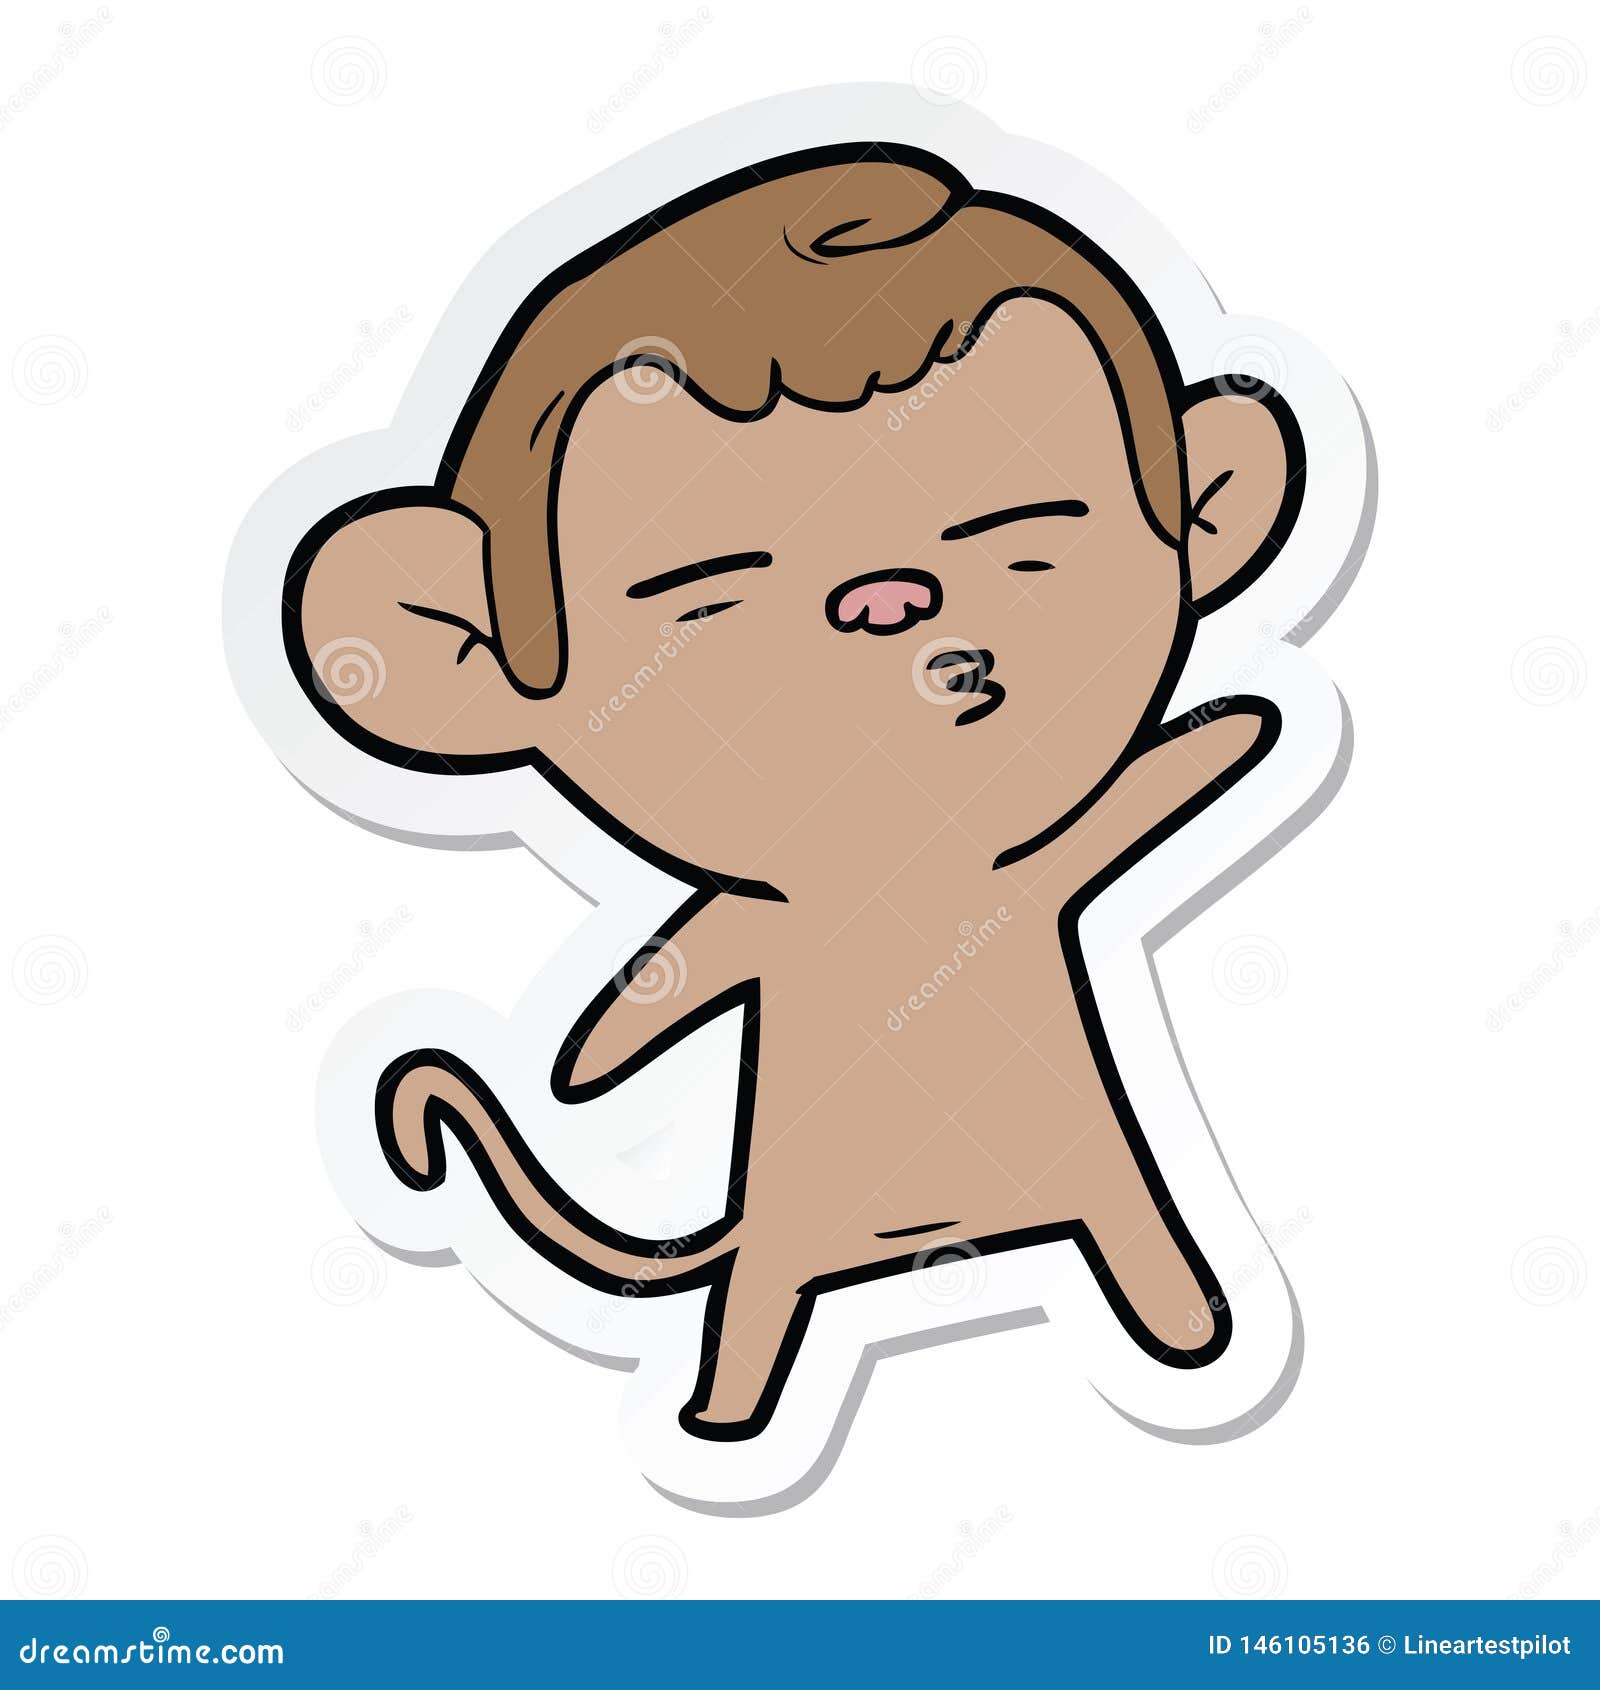 Sticker of a Cartoon Suspicious Monkey Stock Vector - Illustration of ...